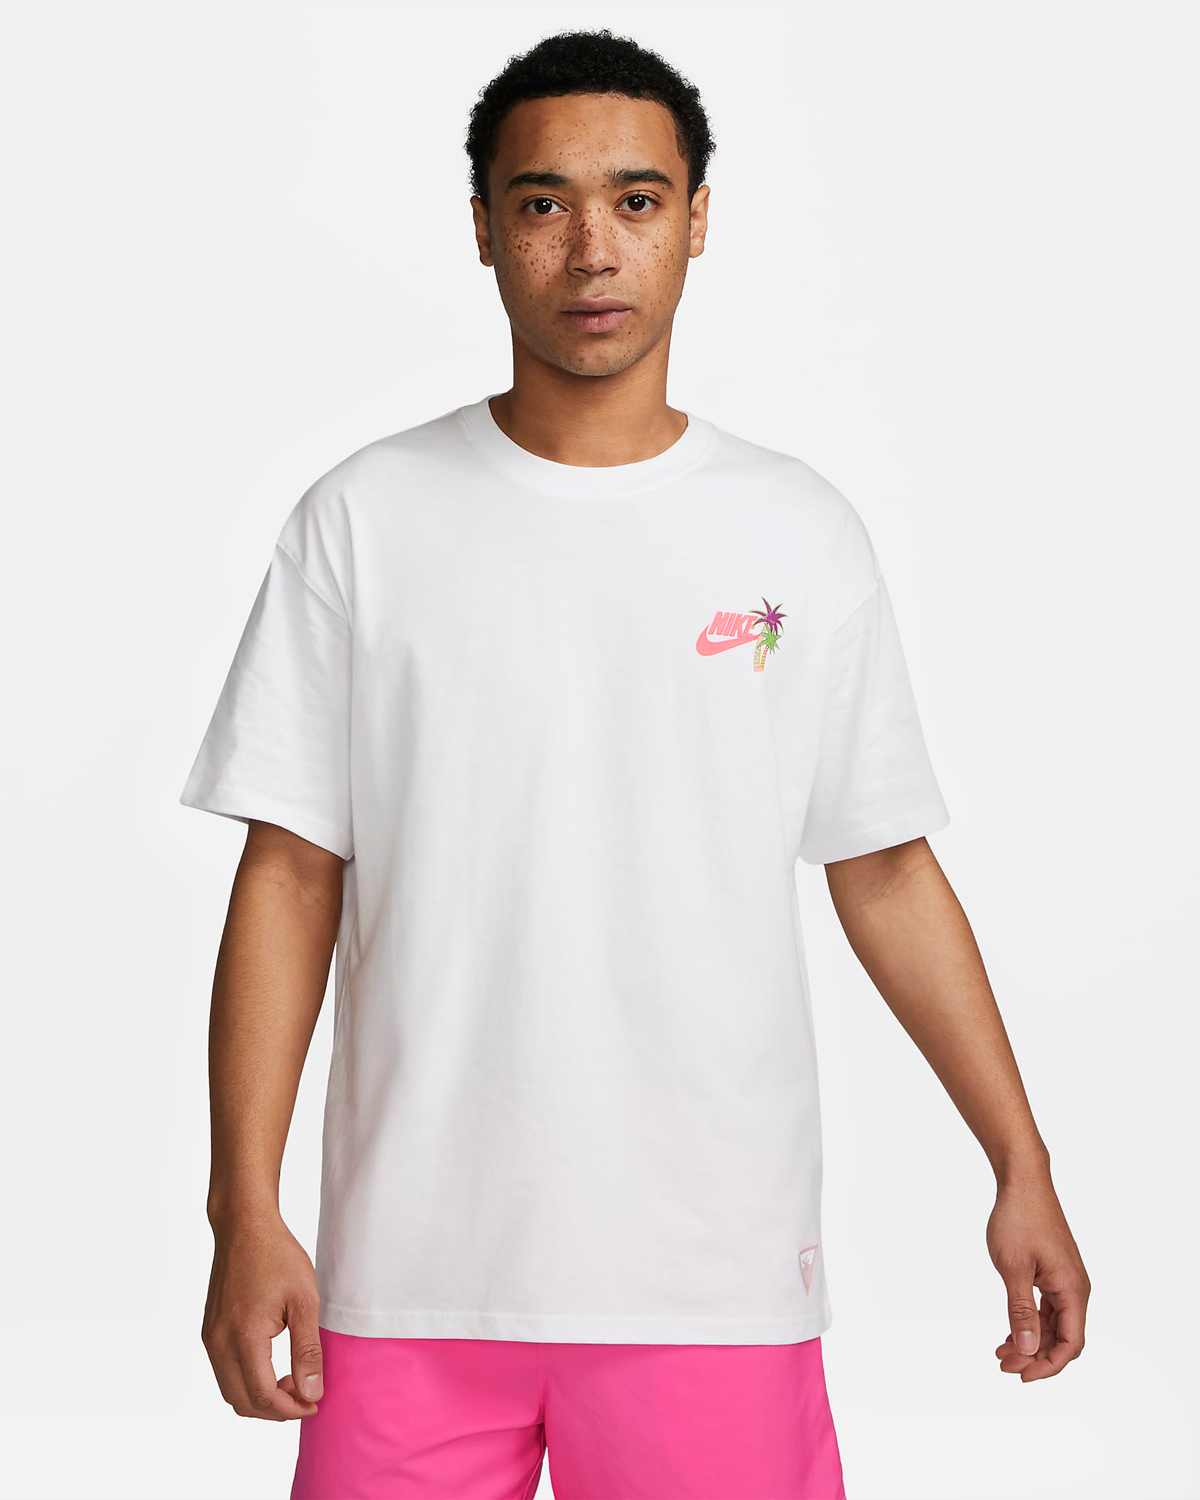 Nike-Sportswear-Sunshine-T-Shirt-White-Pink-1